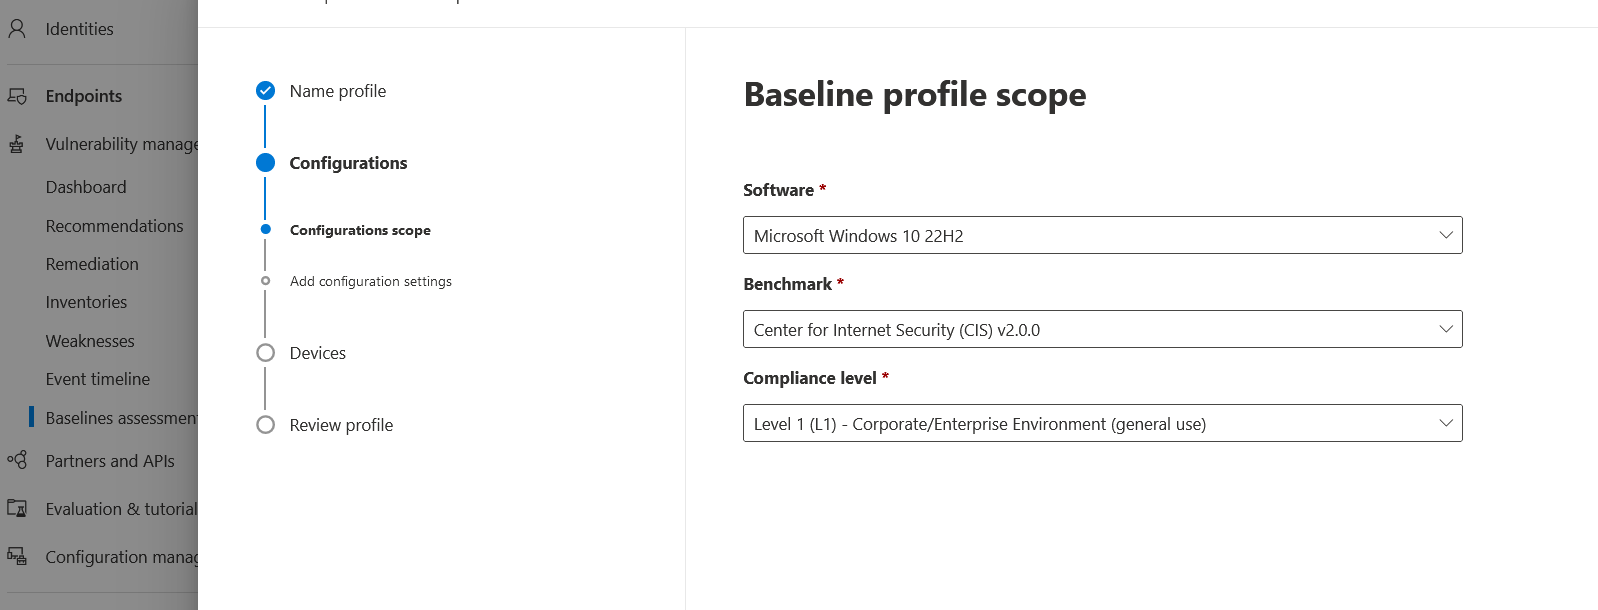 baseline profile scope pic